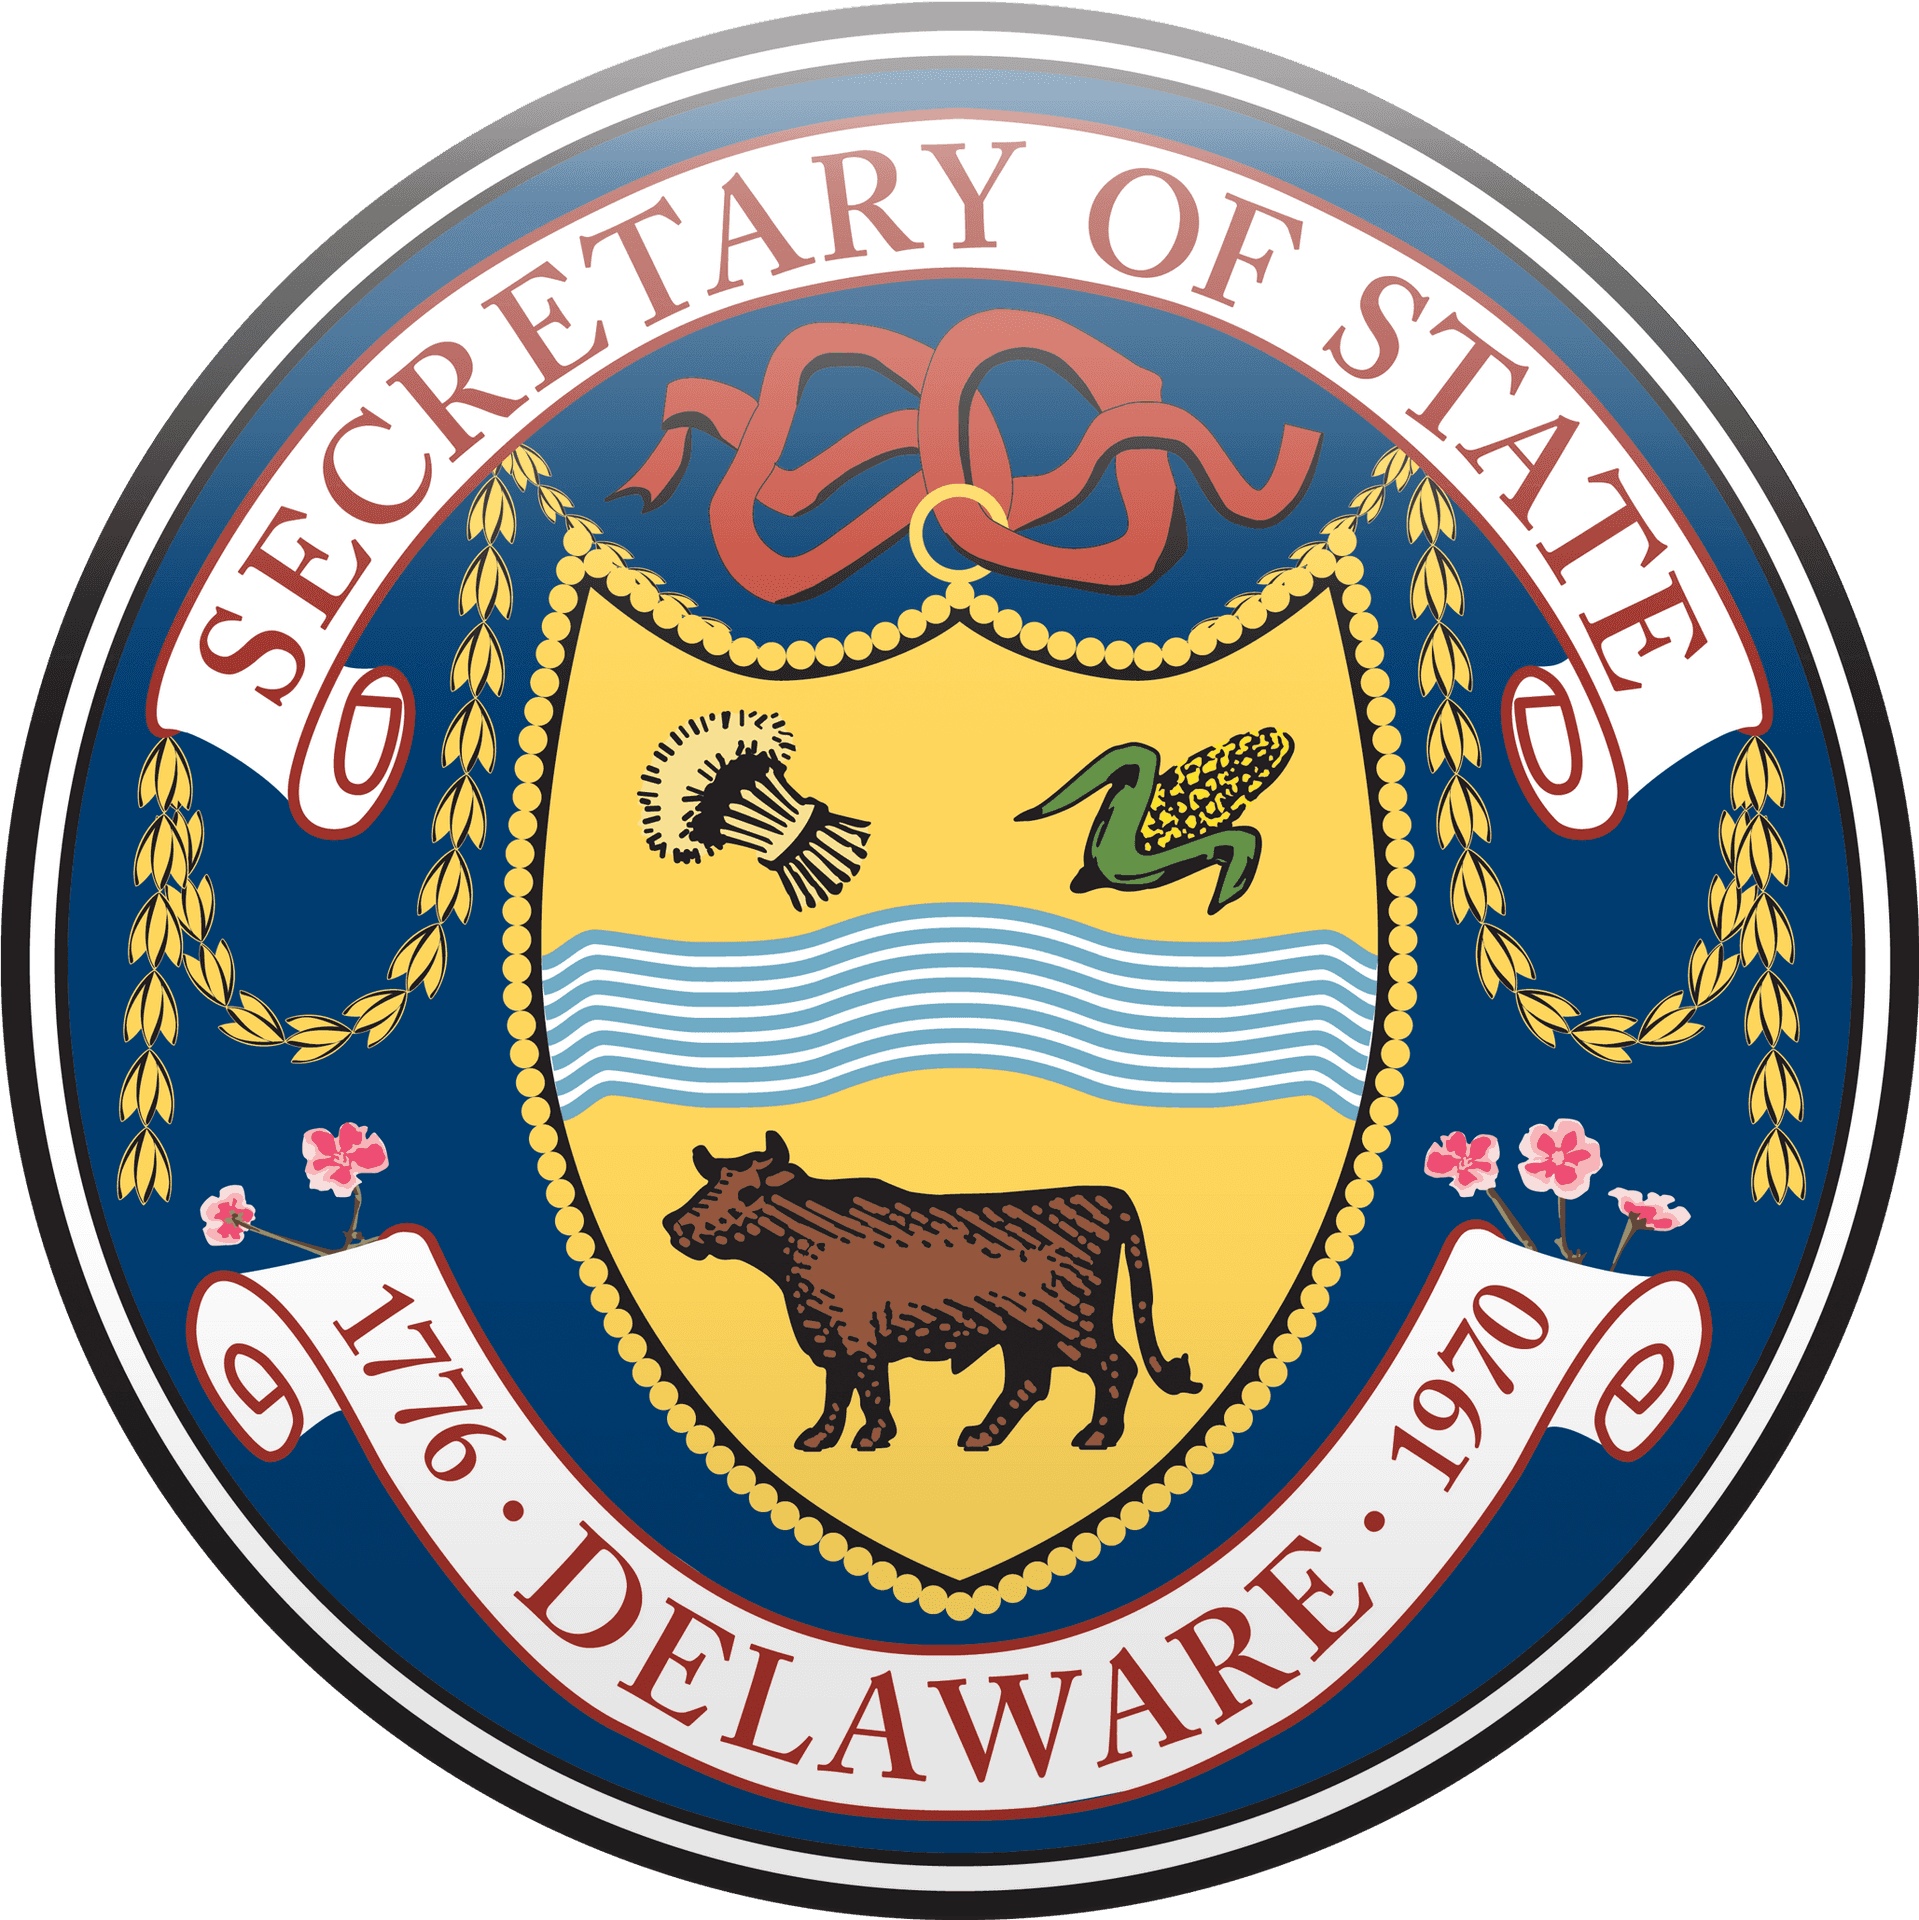 Delaware Secretaryof State Seal PNG image